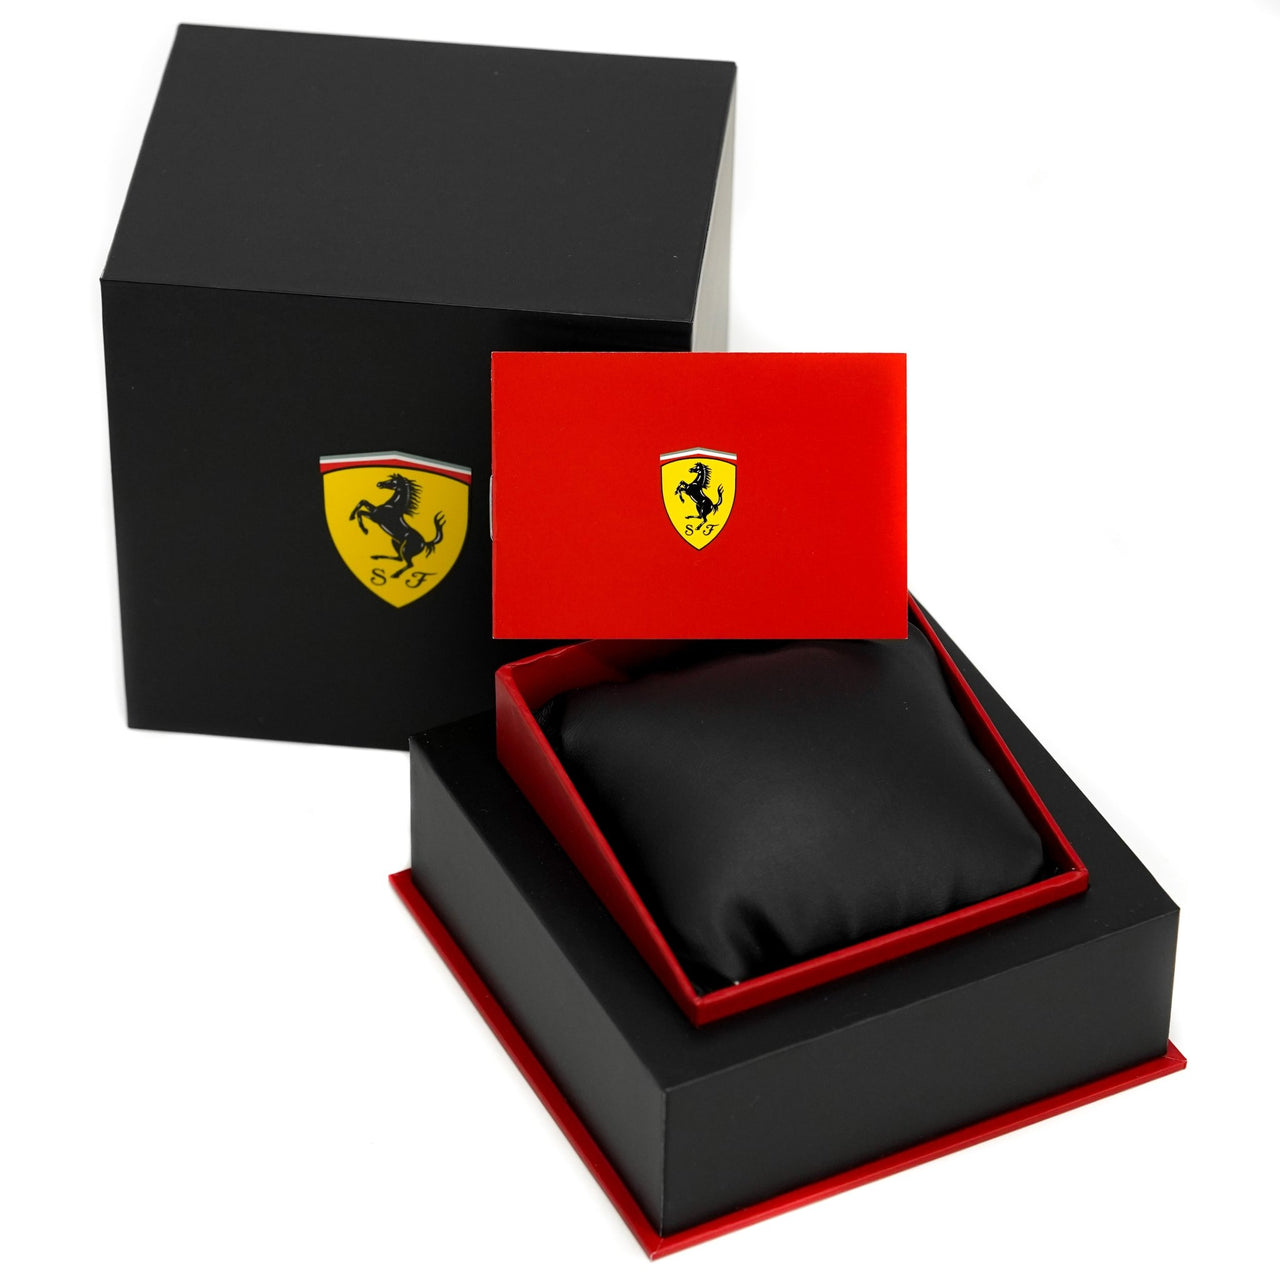 Scuderia Ferrari Watch Pilota Rose Gold FE-083-0522 - Watches & Crystals